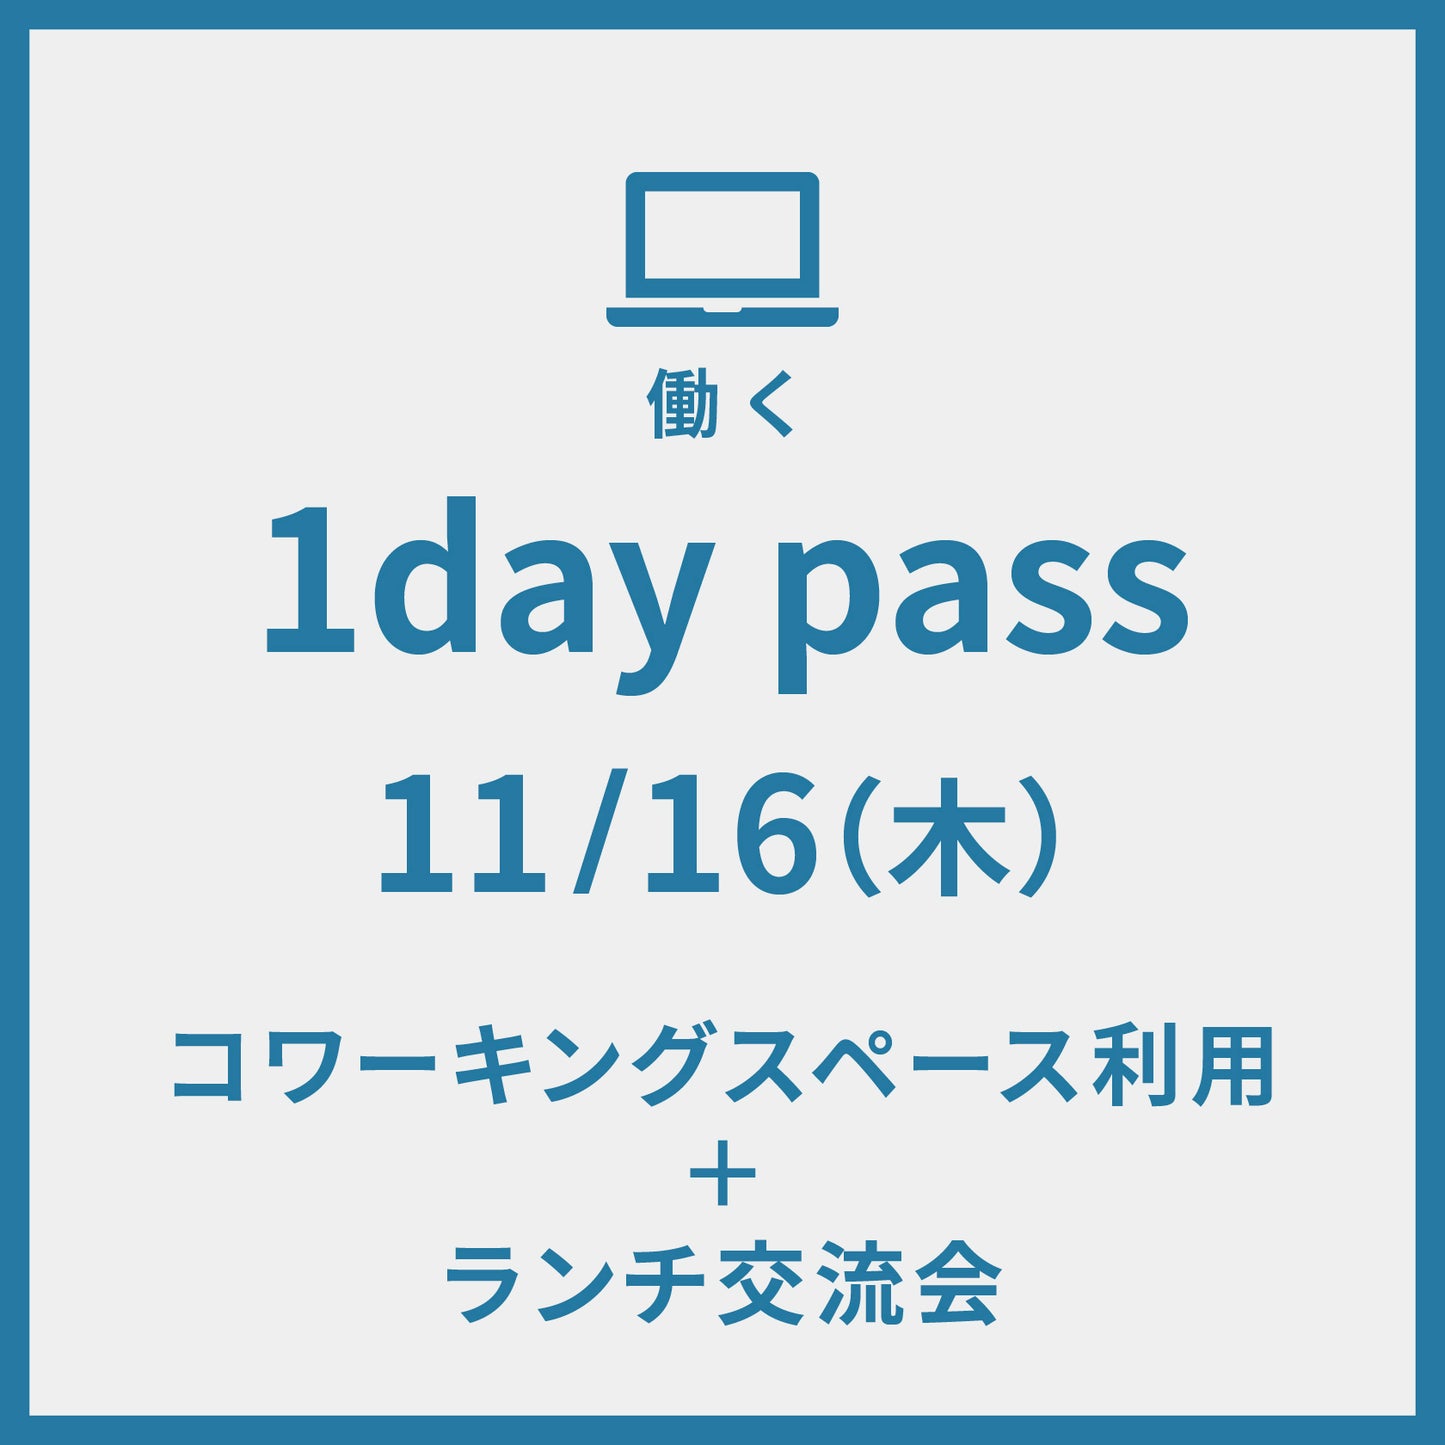 1day pass 11/16 コワーキングスペース利用＋ランチ交流会